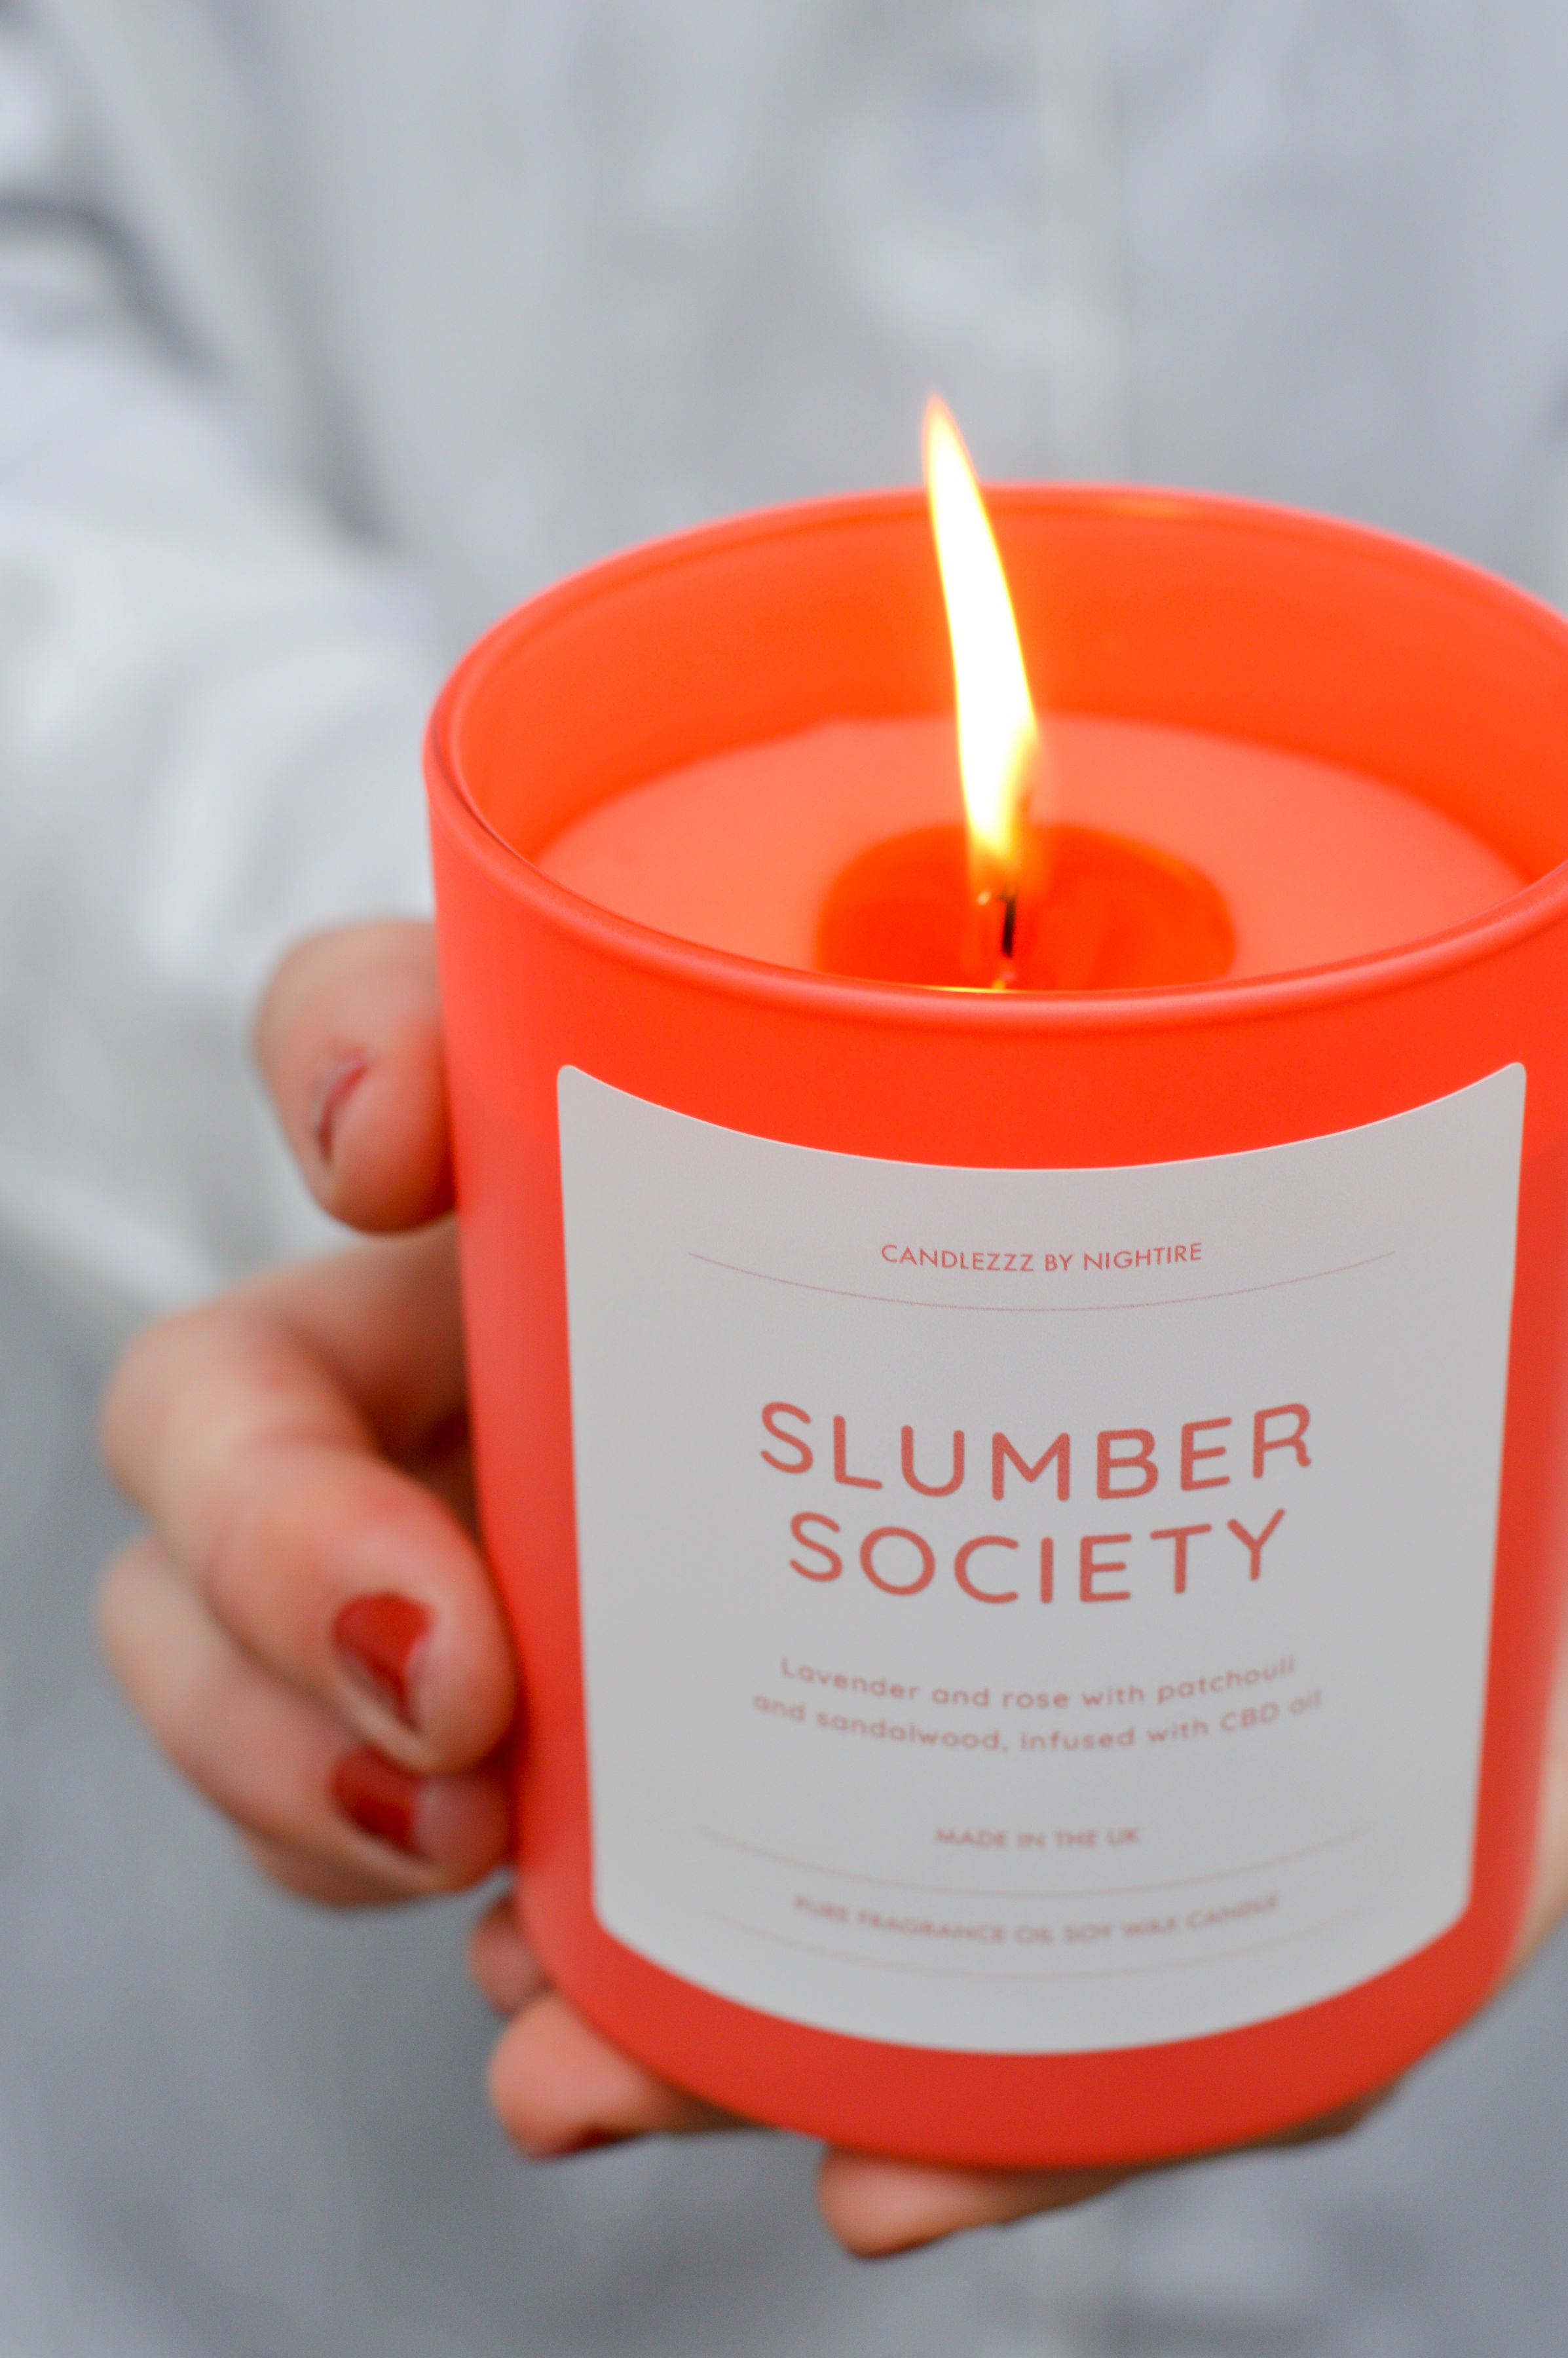 Slumber Society CBD drops Candle